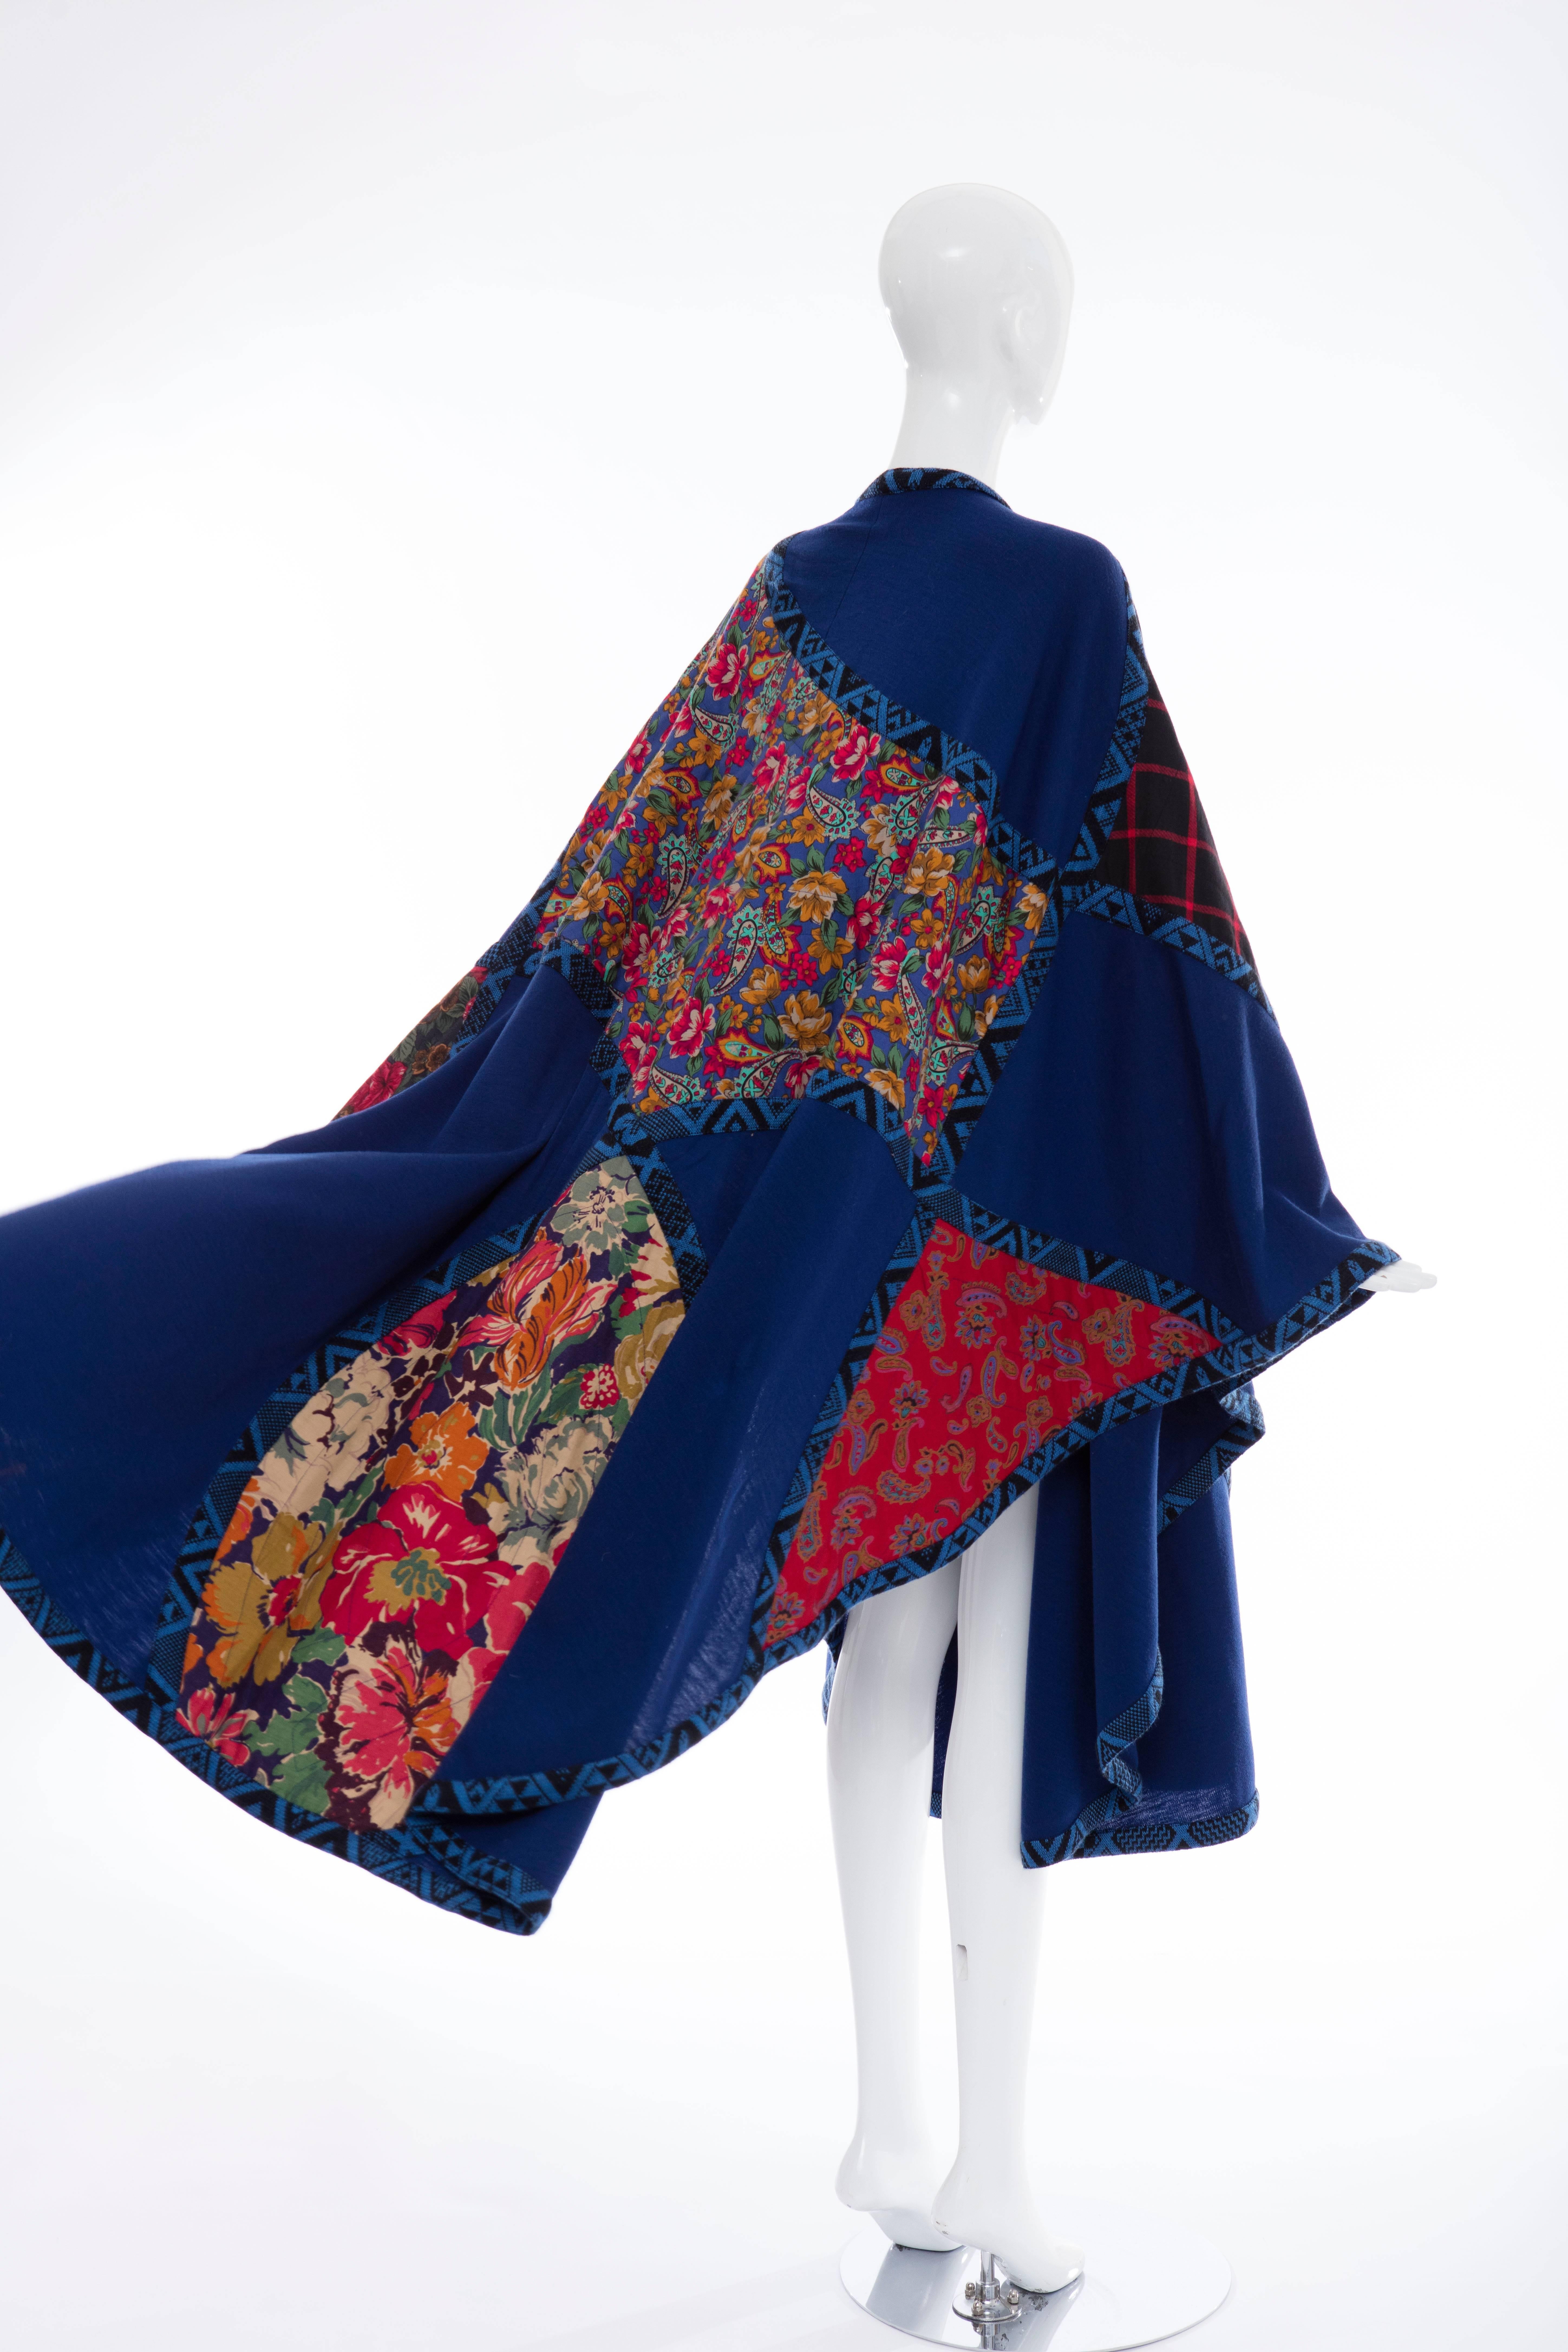 Koos Van Den Akker Royal Blue Cloak With Floral Quilted Patchwork, Circa 1980's 1